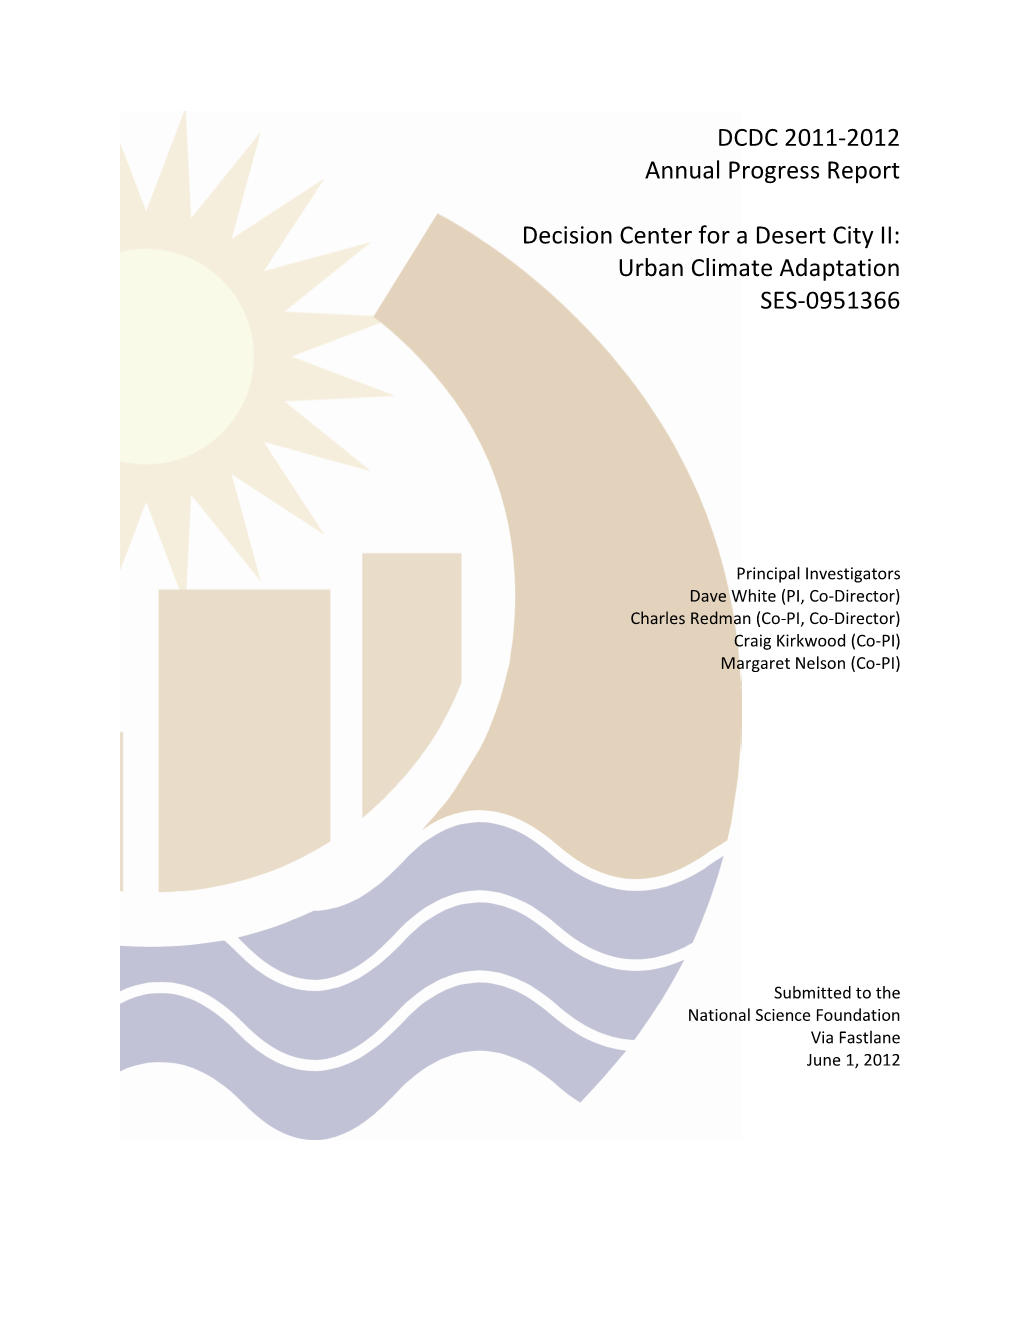 DCDC 2011-2012 Annual Progress Report Decision Center for A